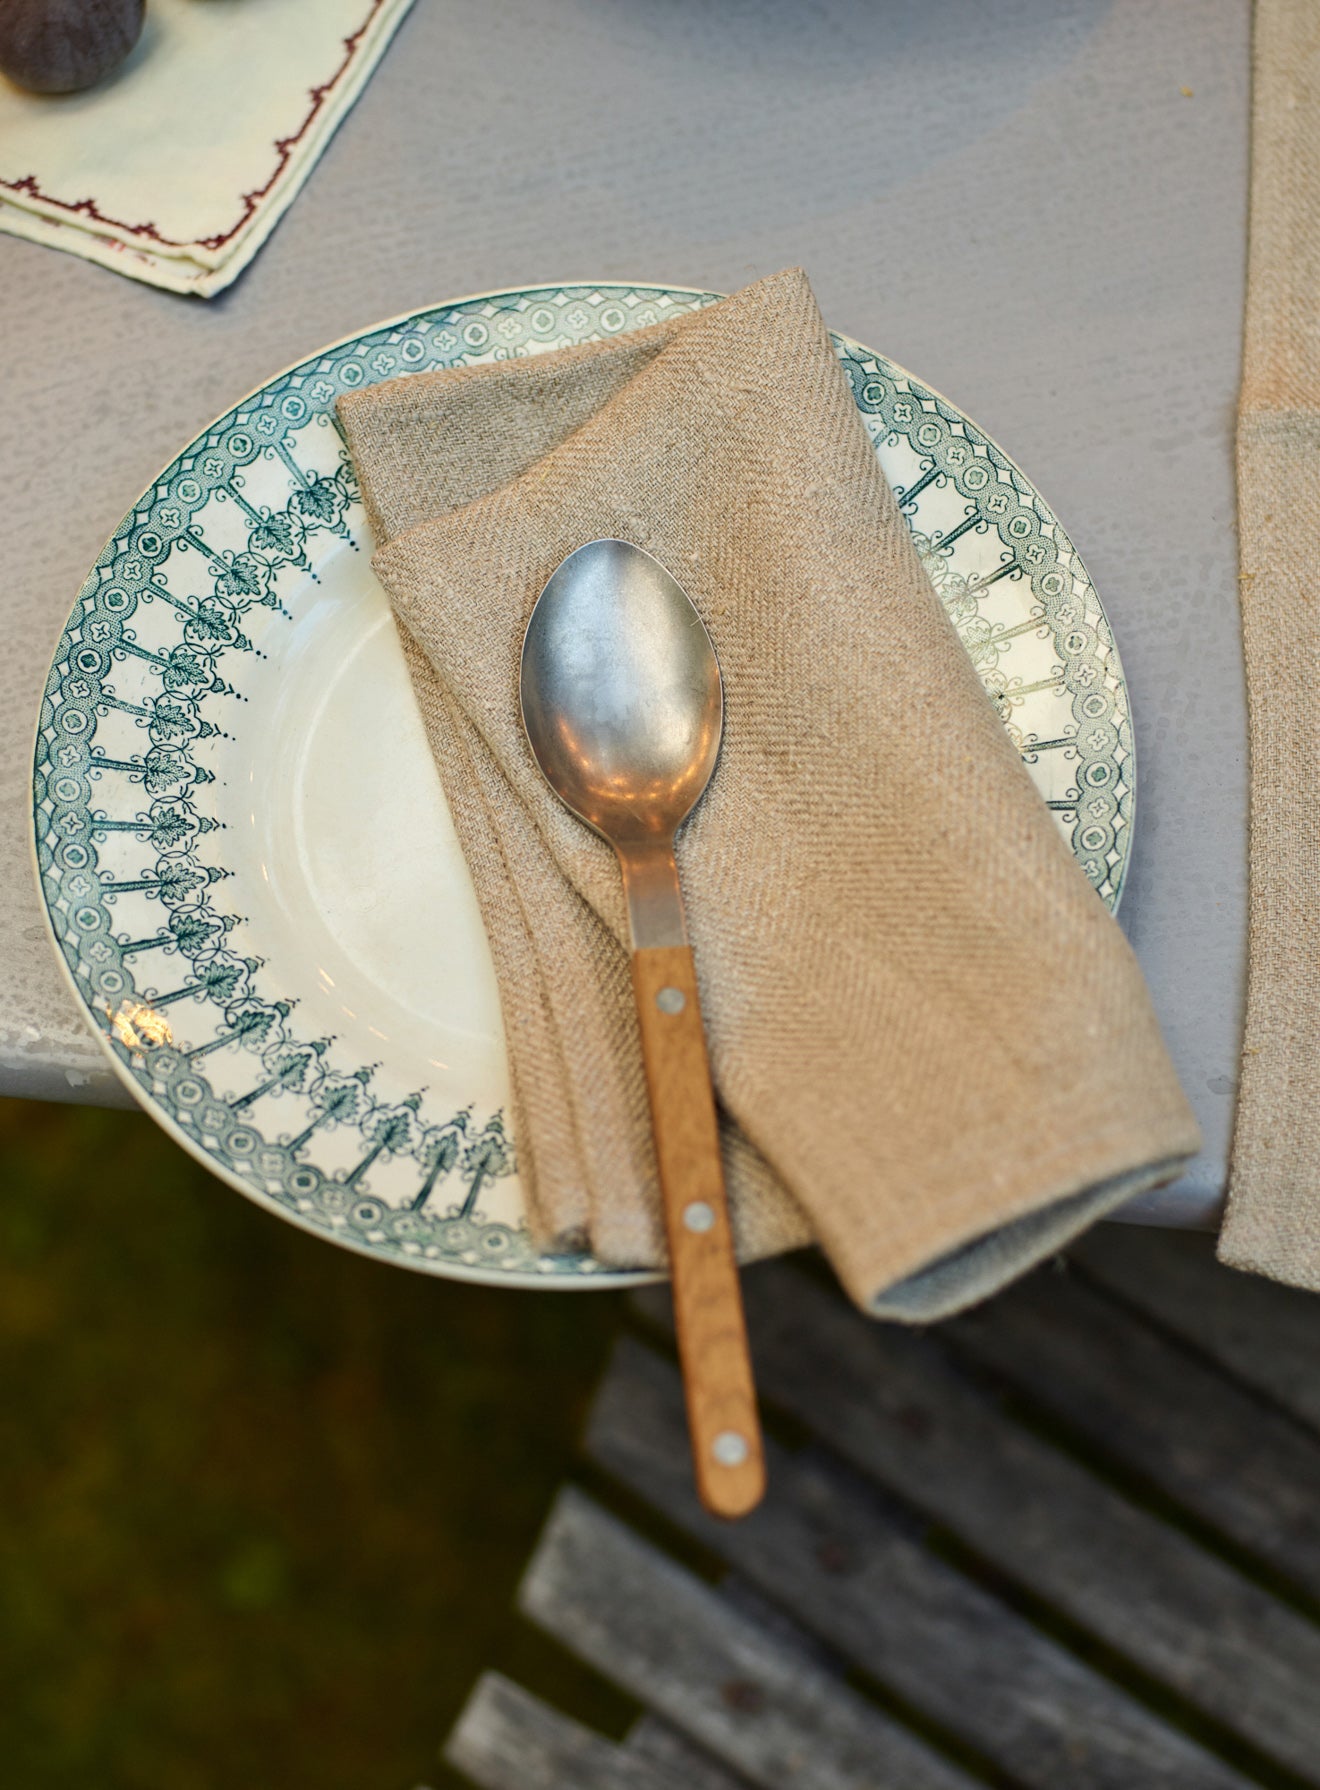 Vintage Wooden Cutlery, Dessert Spoon, Set of Six